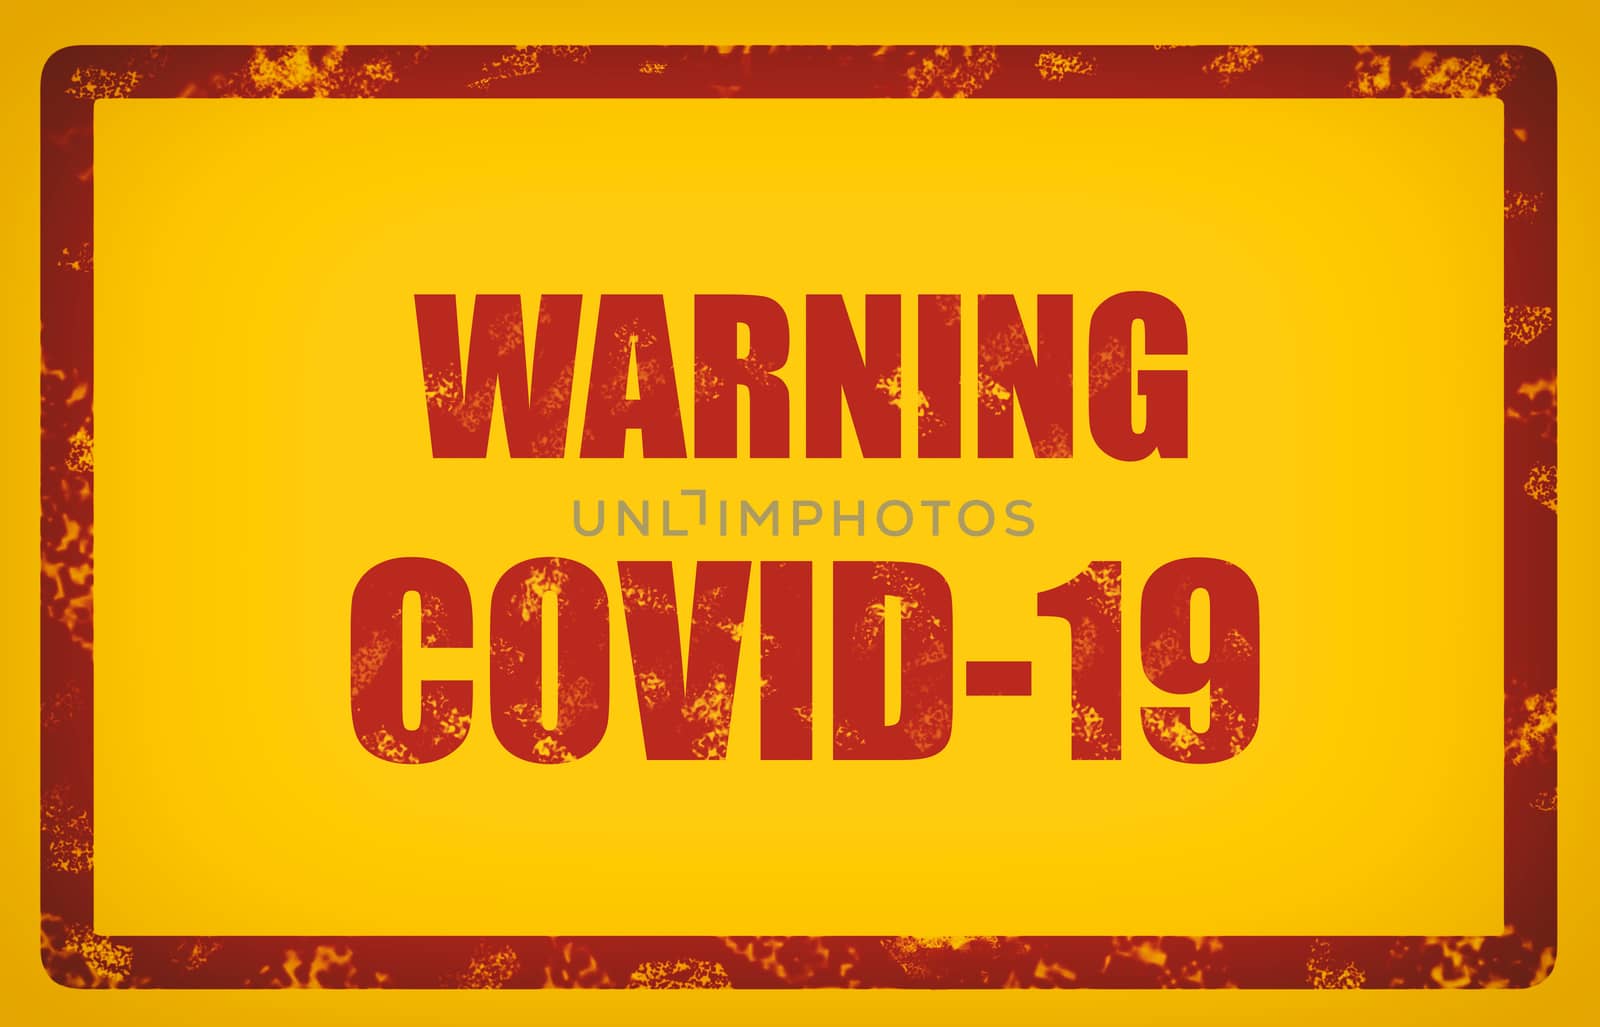 COVID-19 warning sign red text on yellow background. Coronavirus graphic design corona virus caution billboard illustration by Maridav